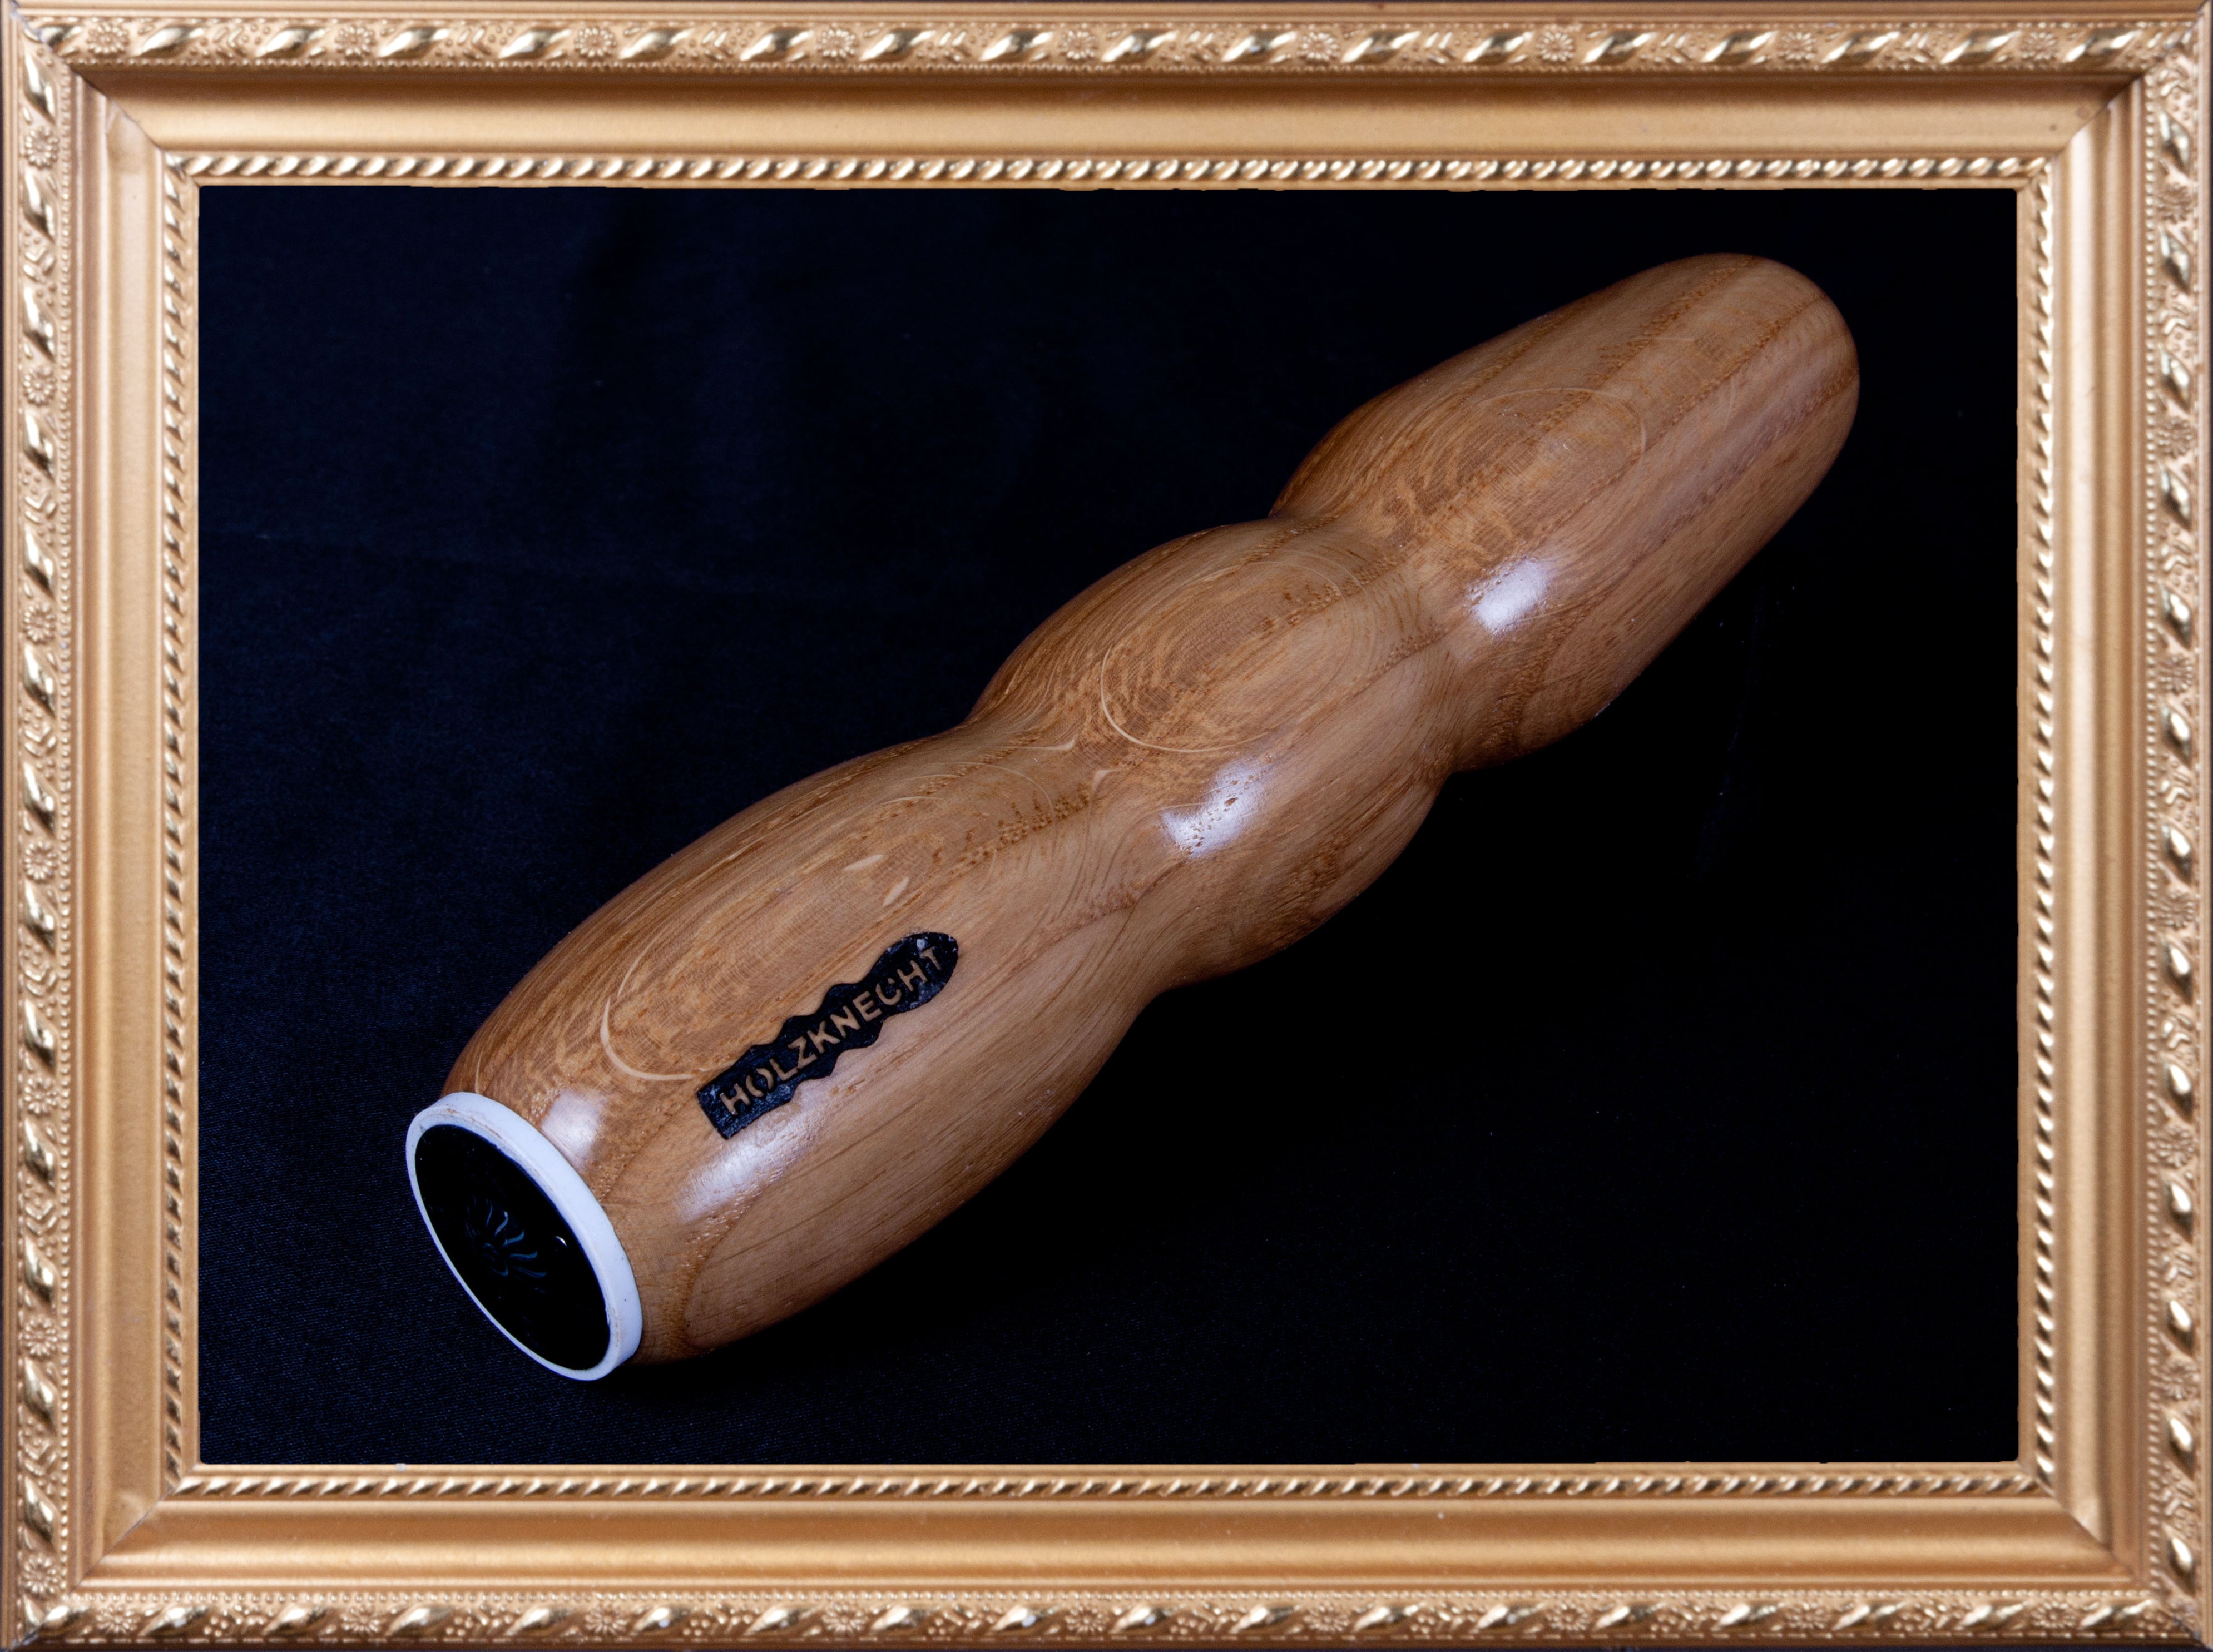 SUMMSI || Eiche || Holzvibrator || Holzdildo || Sex Toy || Wood Vibrator || handmade by HolzKnecht